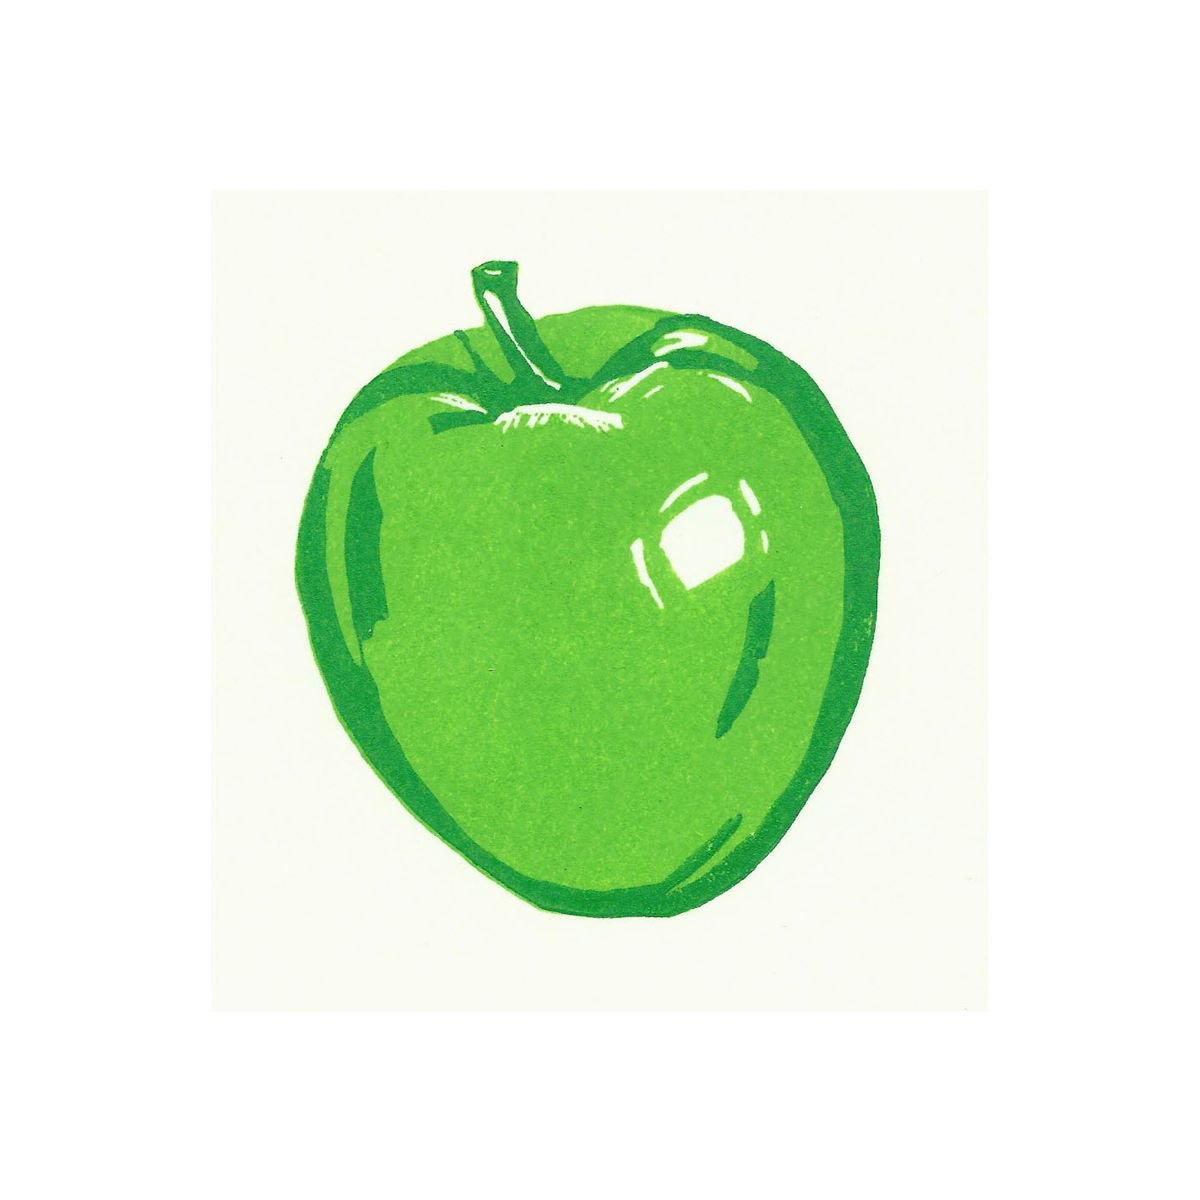 Magritte’s apple by Kirstie Dedman